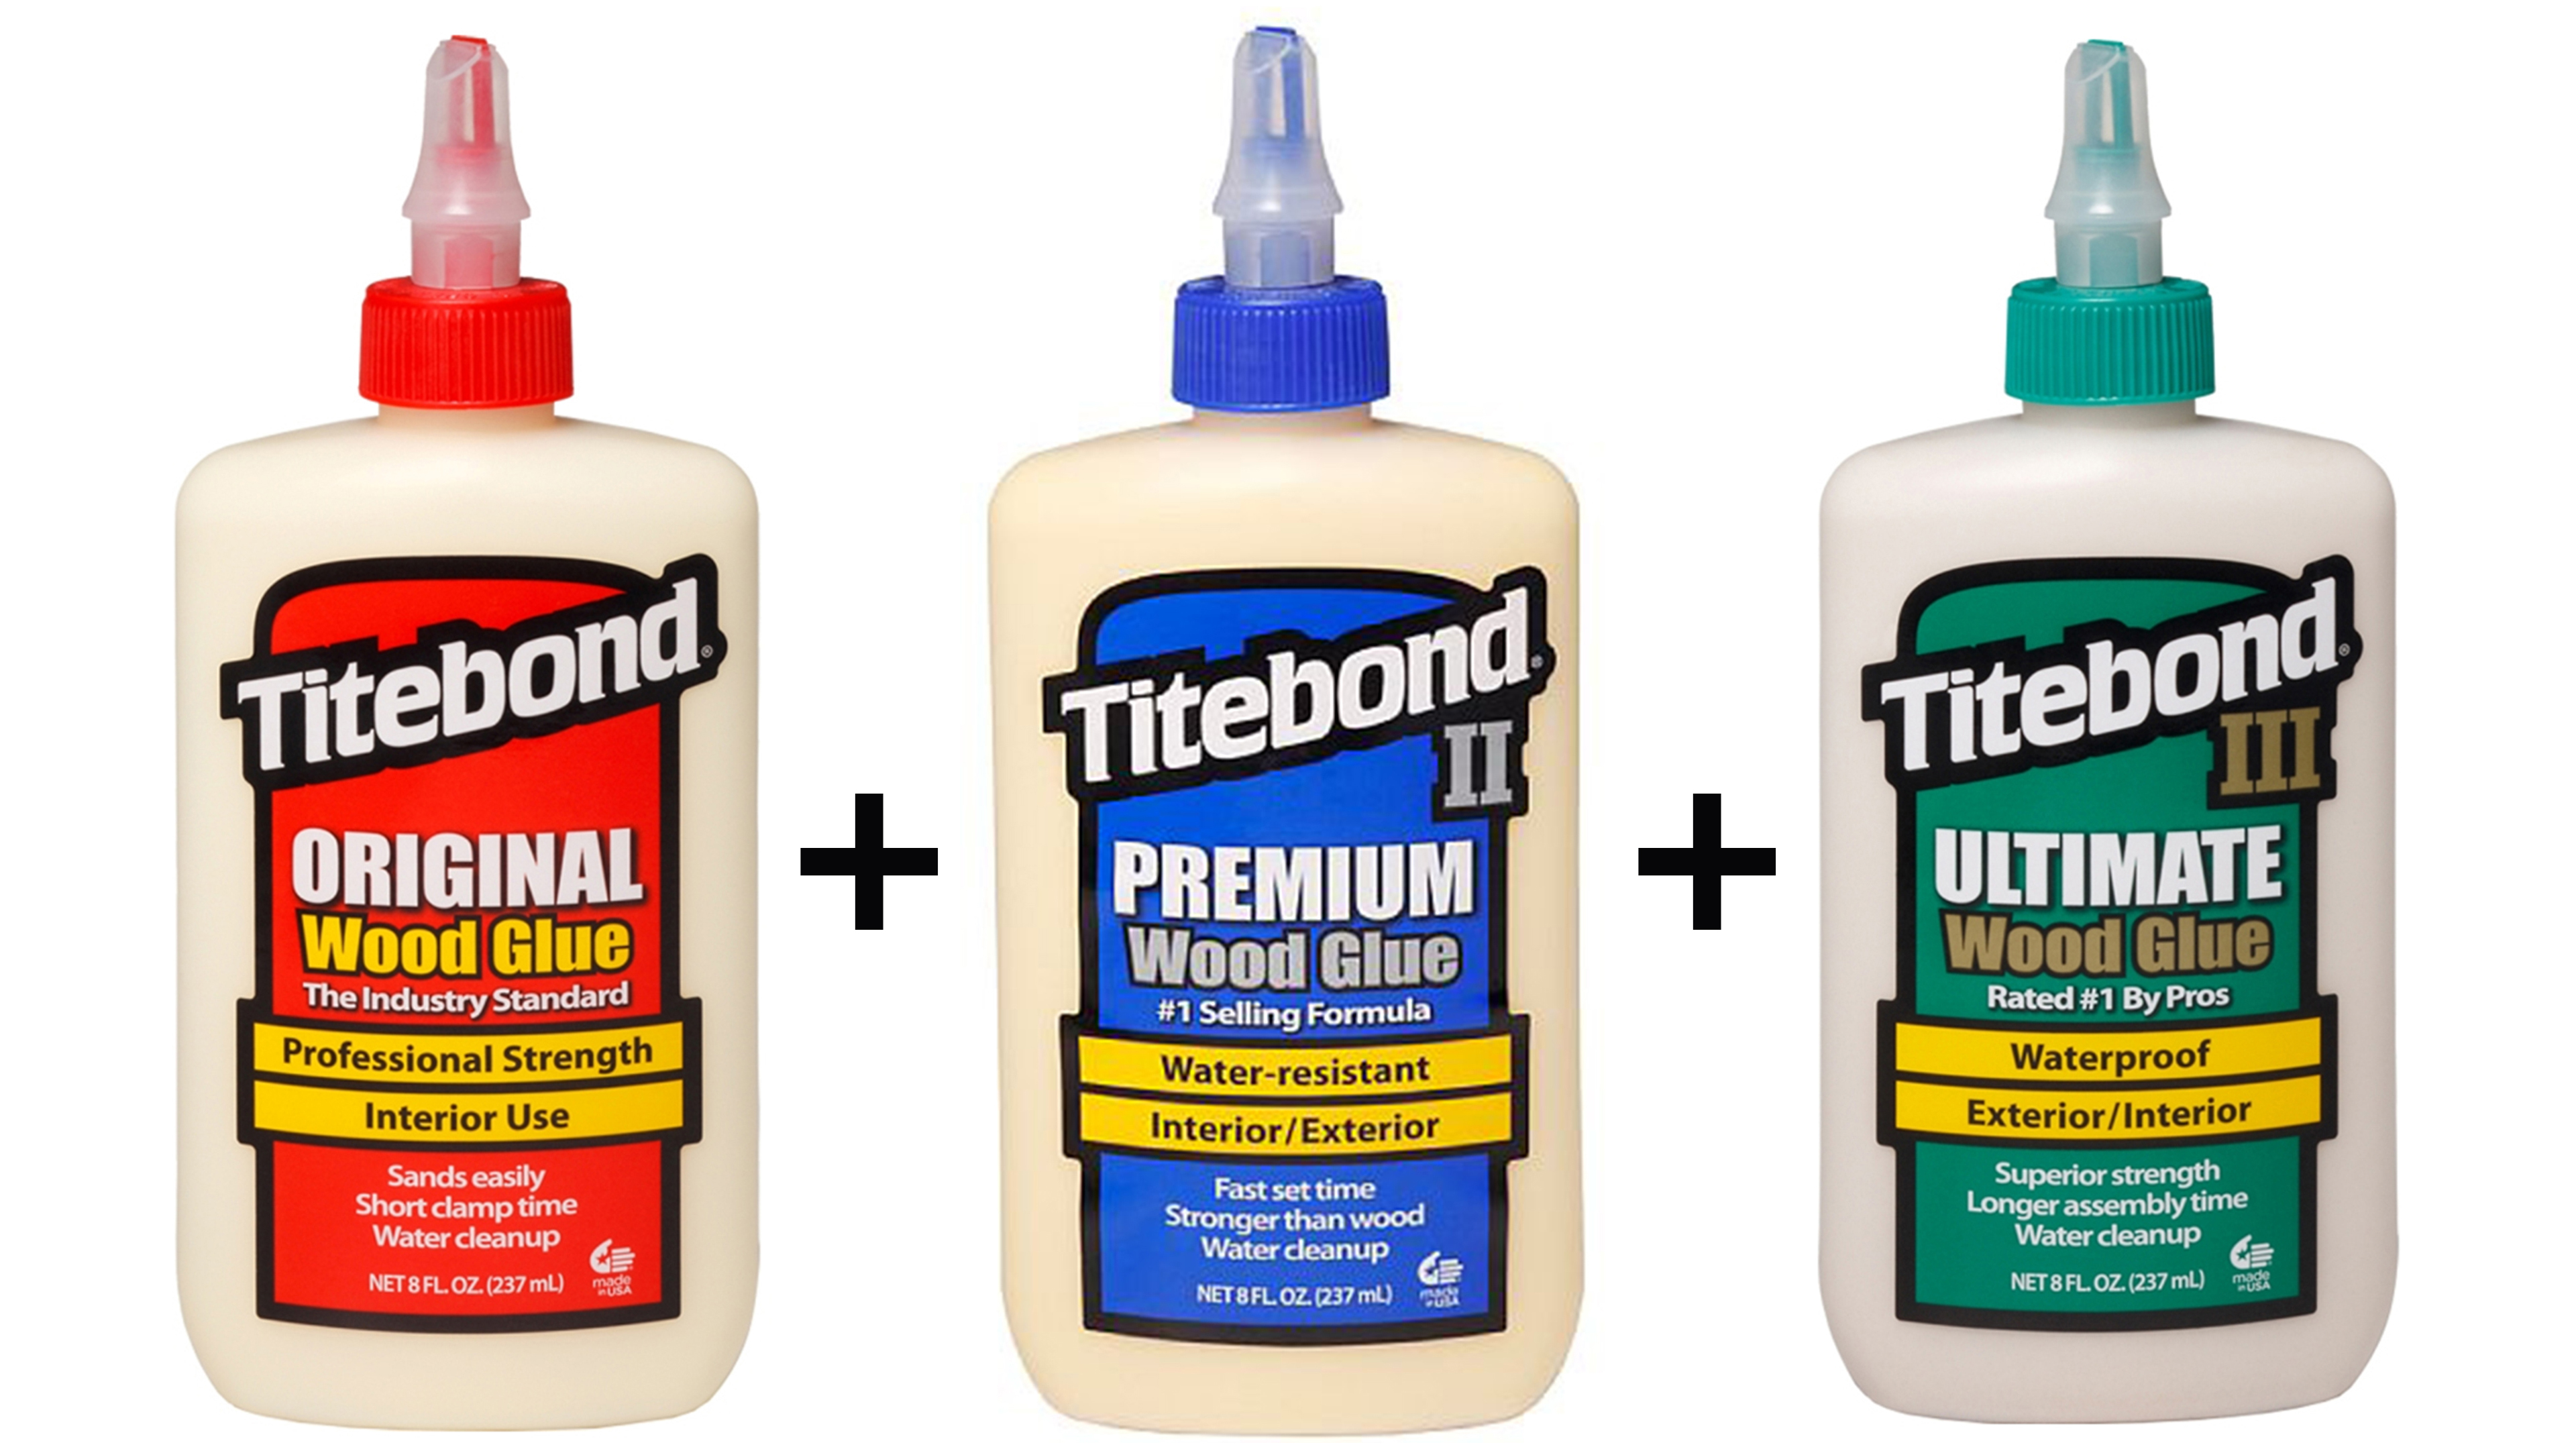 Titebond 5033 All Purpose Glue, White, 8 oz Bottle